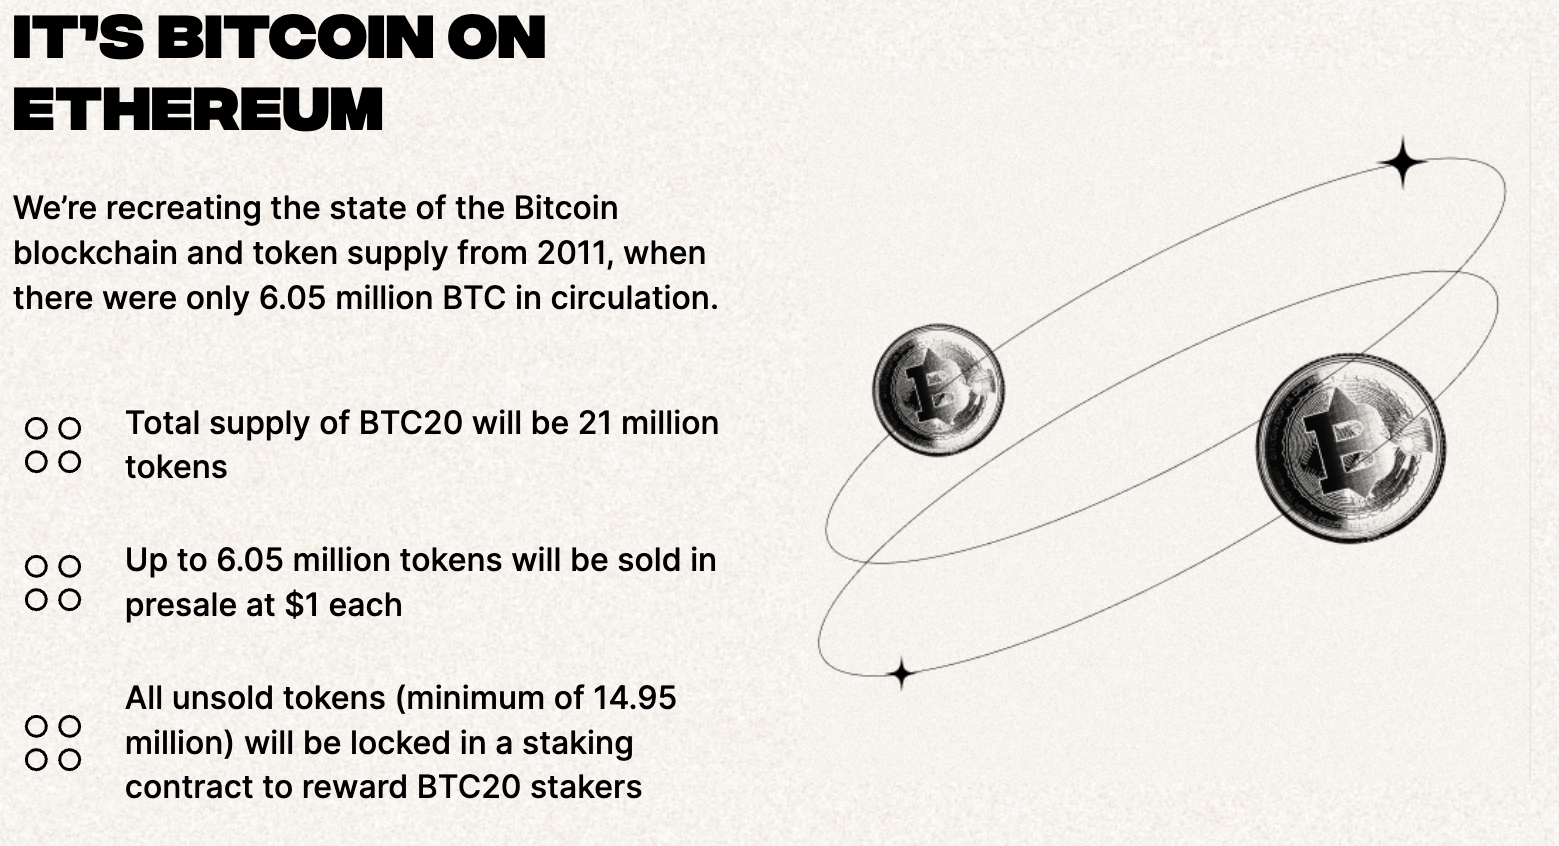 BTC20 Ethereum based Bitcoin